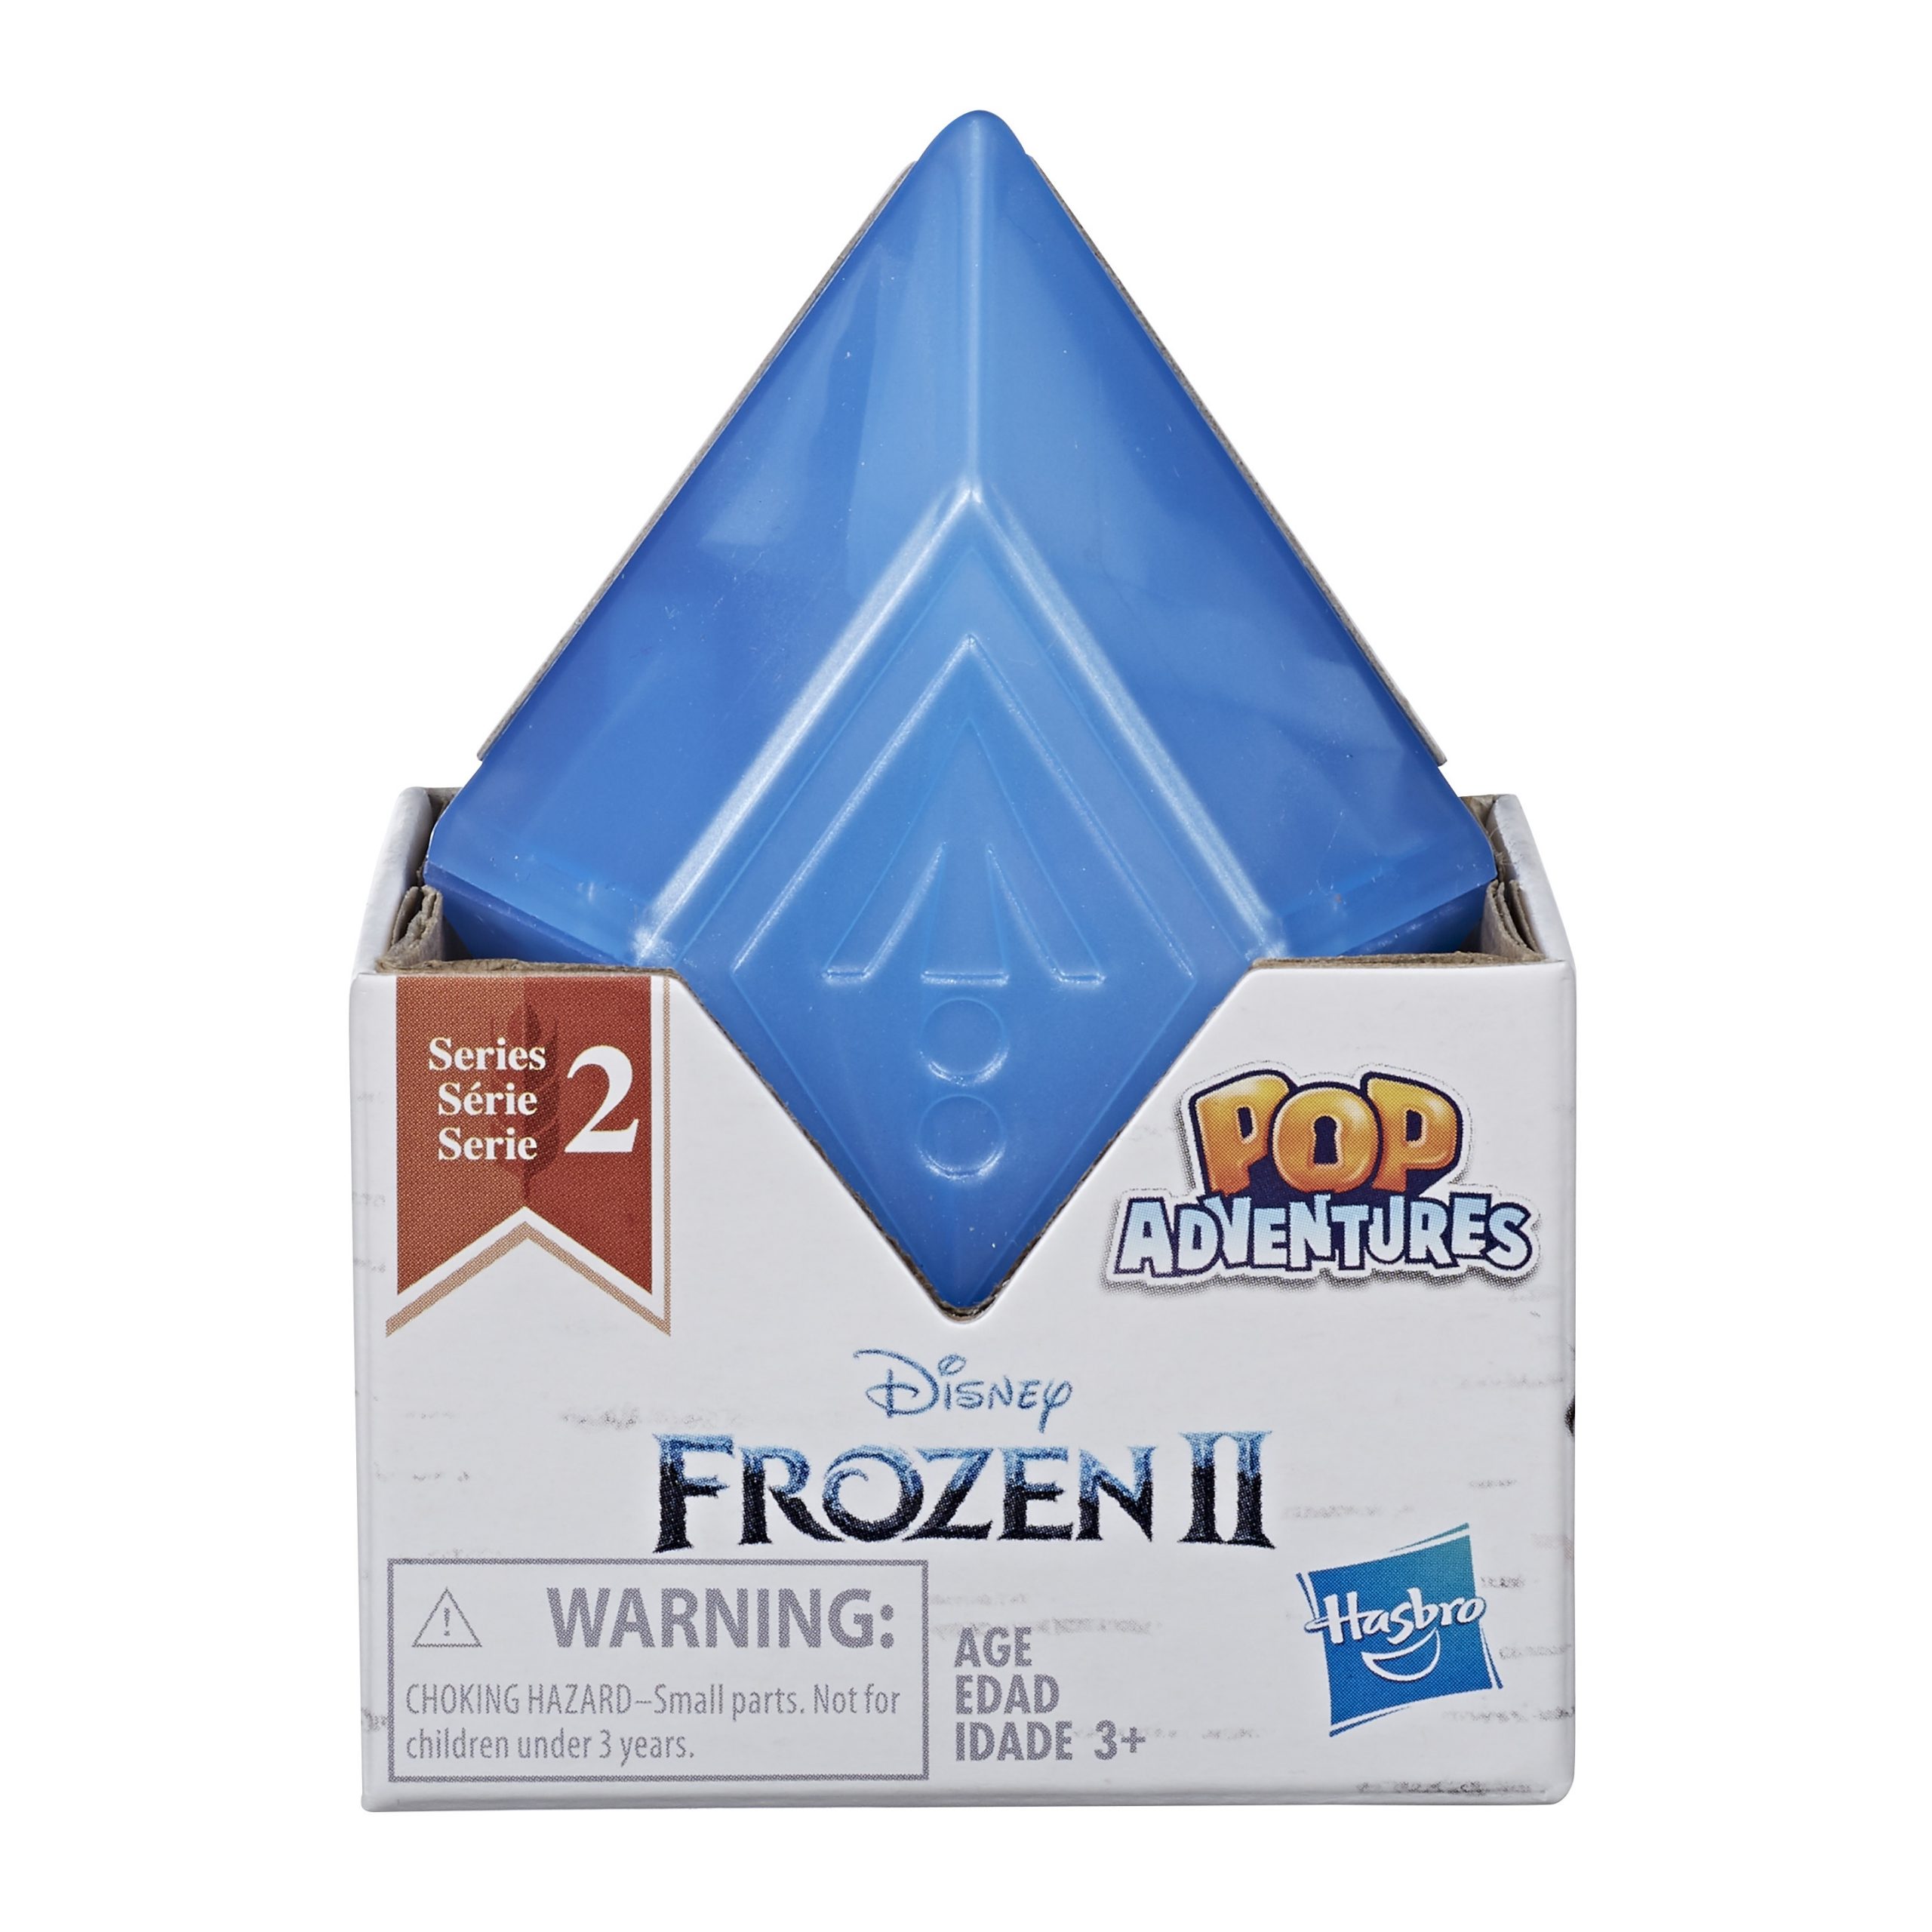 Disney Frozen 2 Pop Adventures Series 1 Surprise Blind Box E7276 1τμχ - 